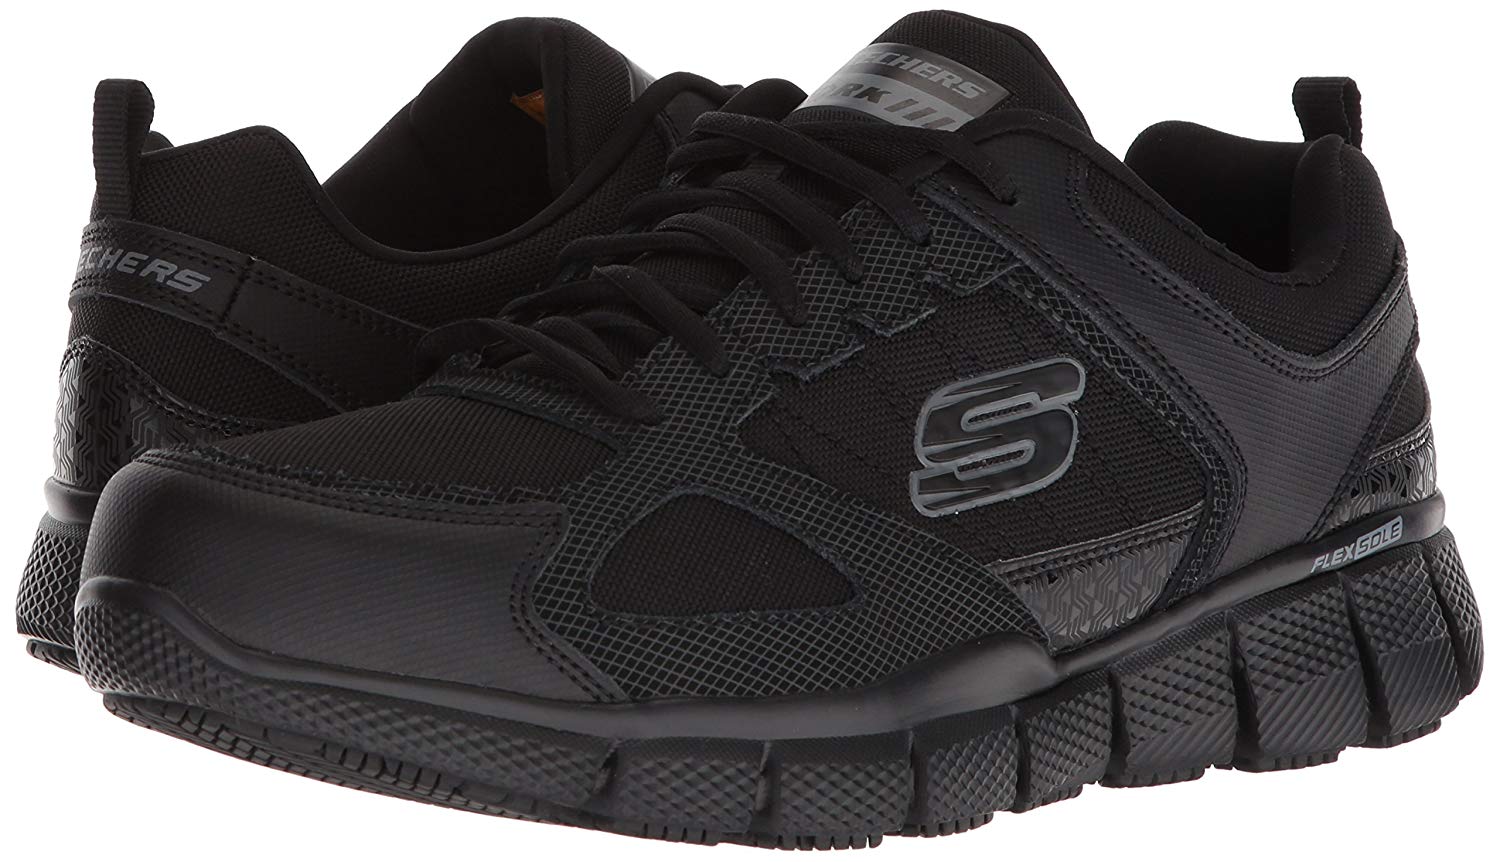 Skechers Men's Telfin-sanphet Industrial Shoe, Black, Size 11.0 AlfA US ...